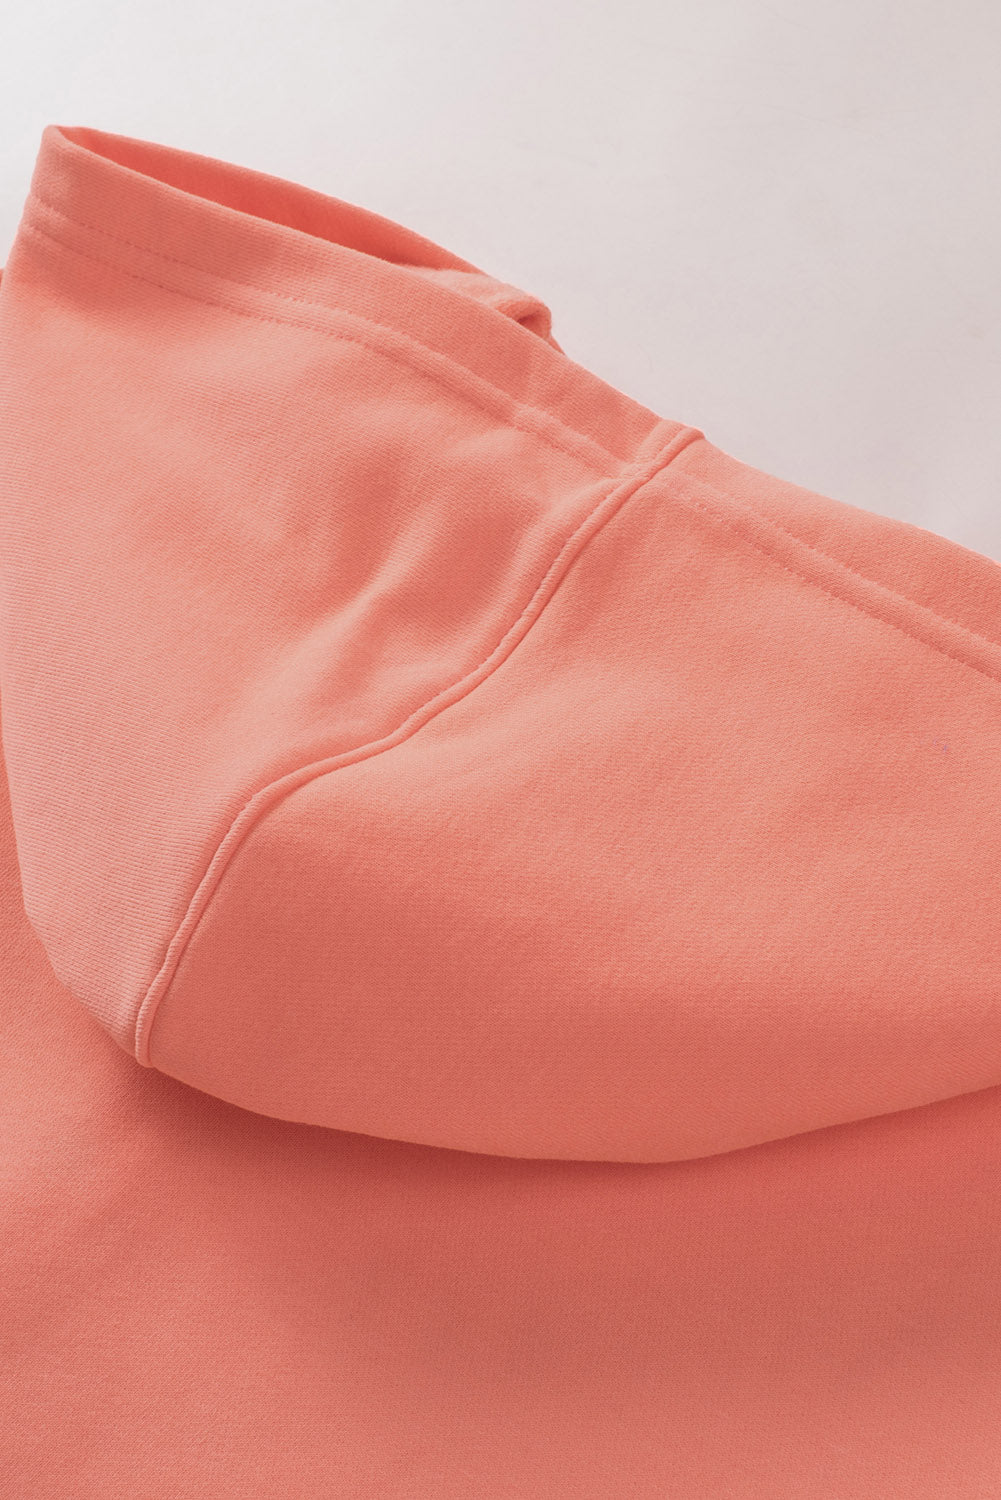 Narančasta majica s kapuljačom s džepom u obliku krila šišmiša